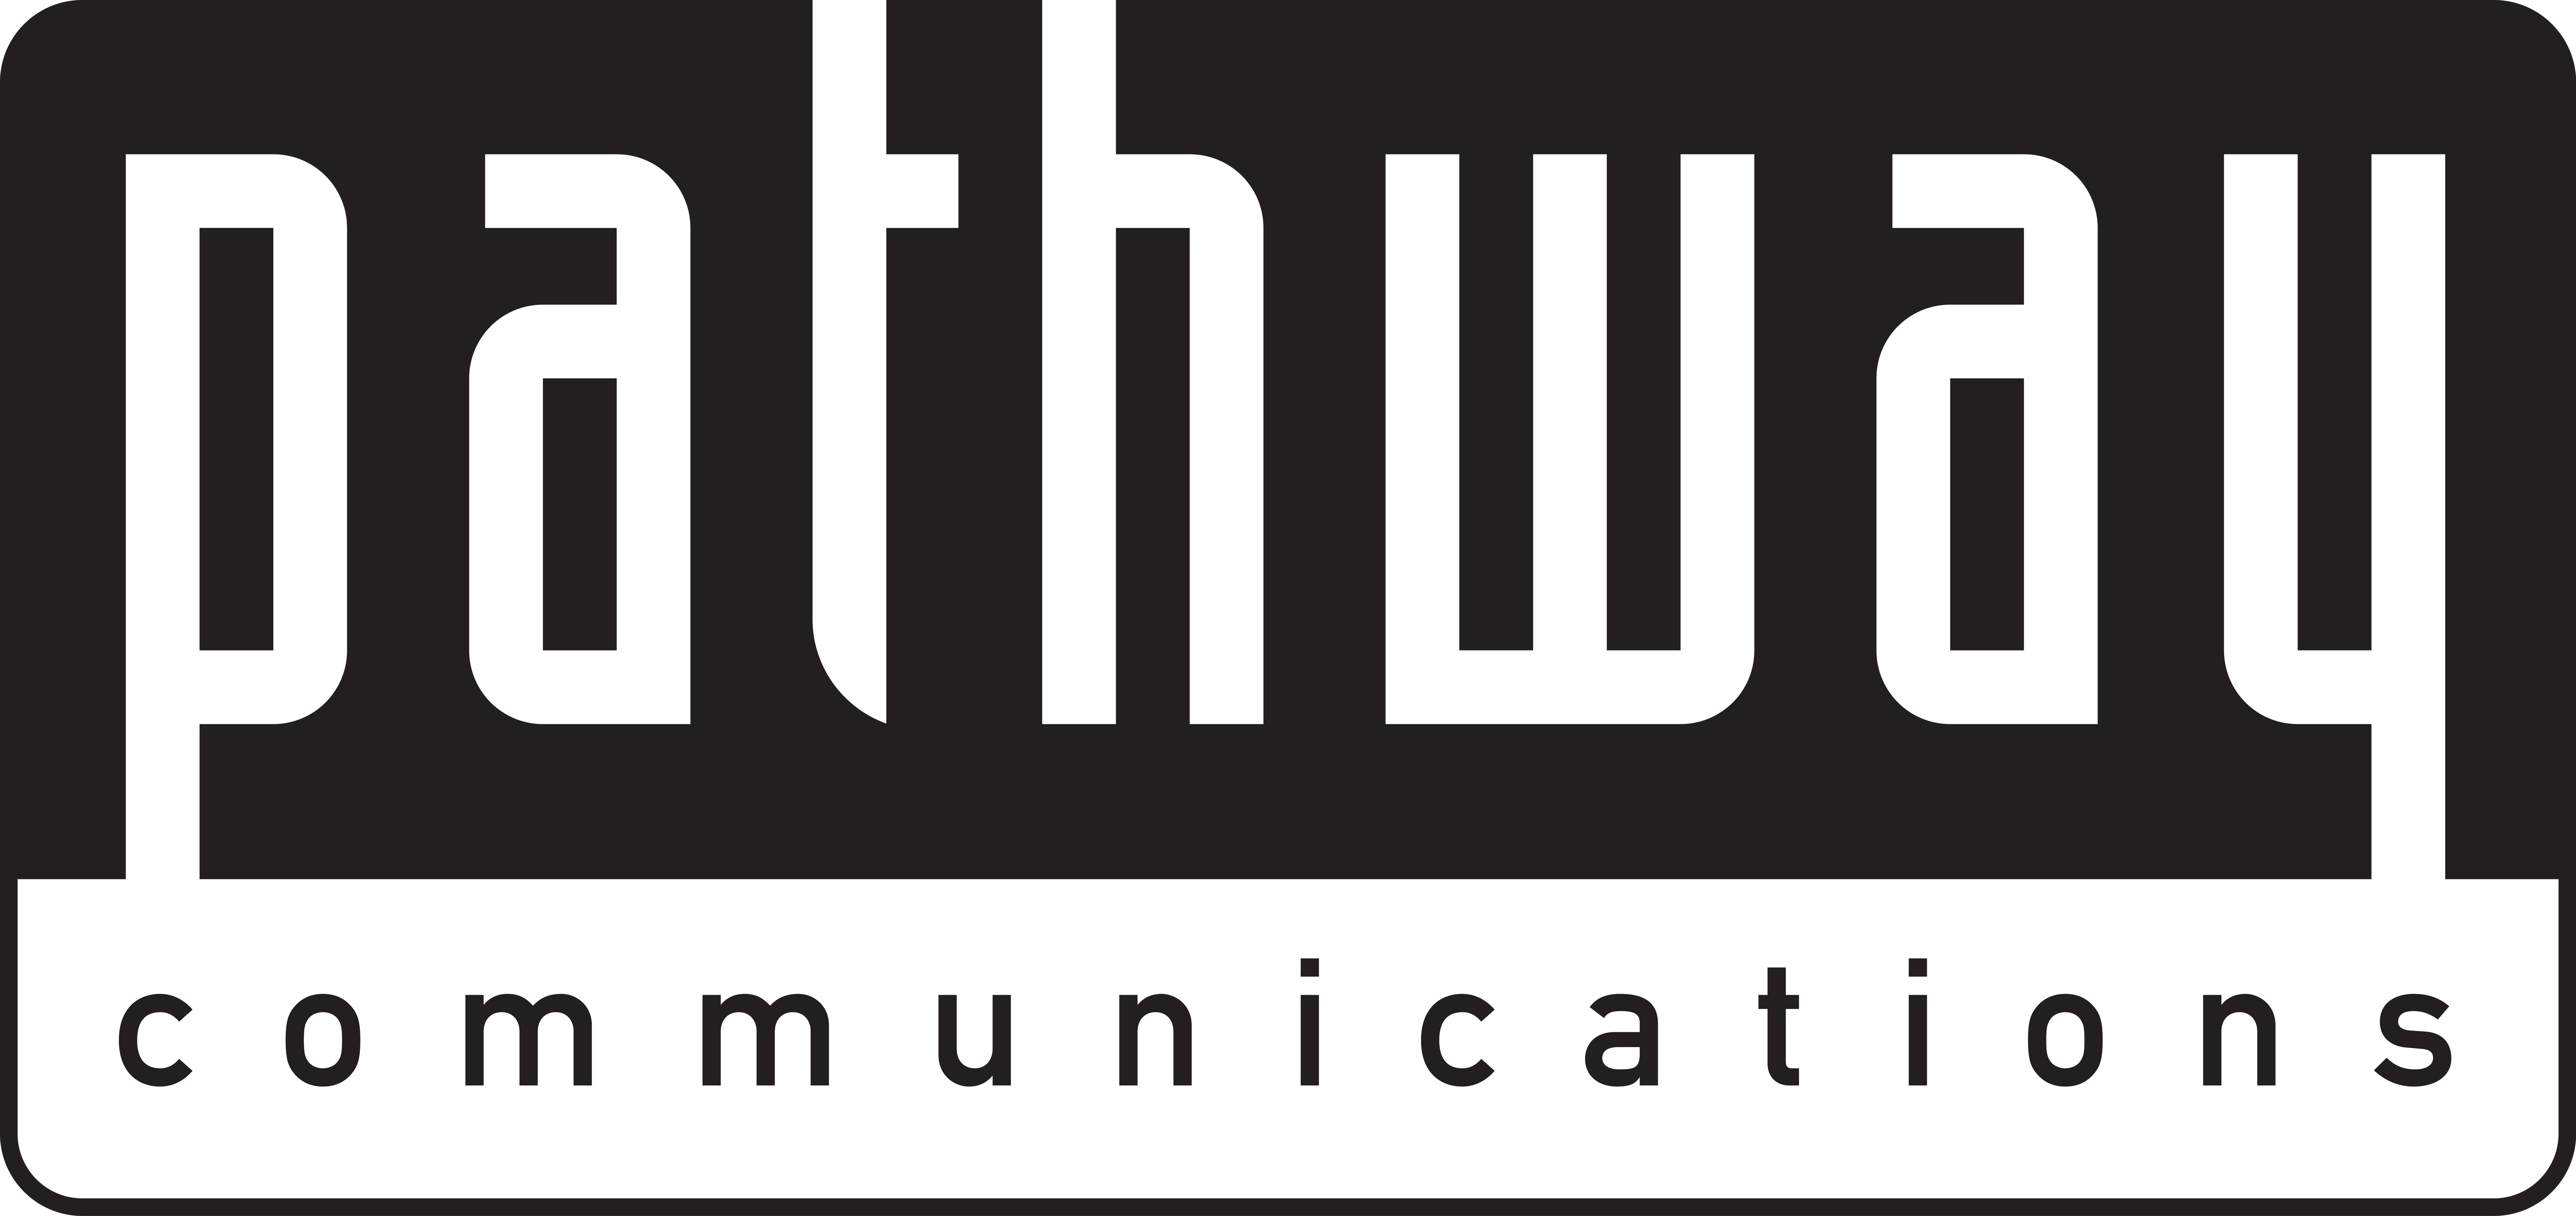 Pathway Communications logo